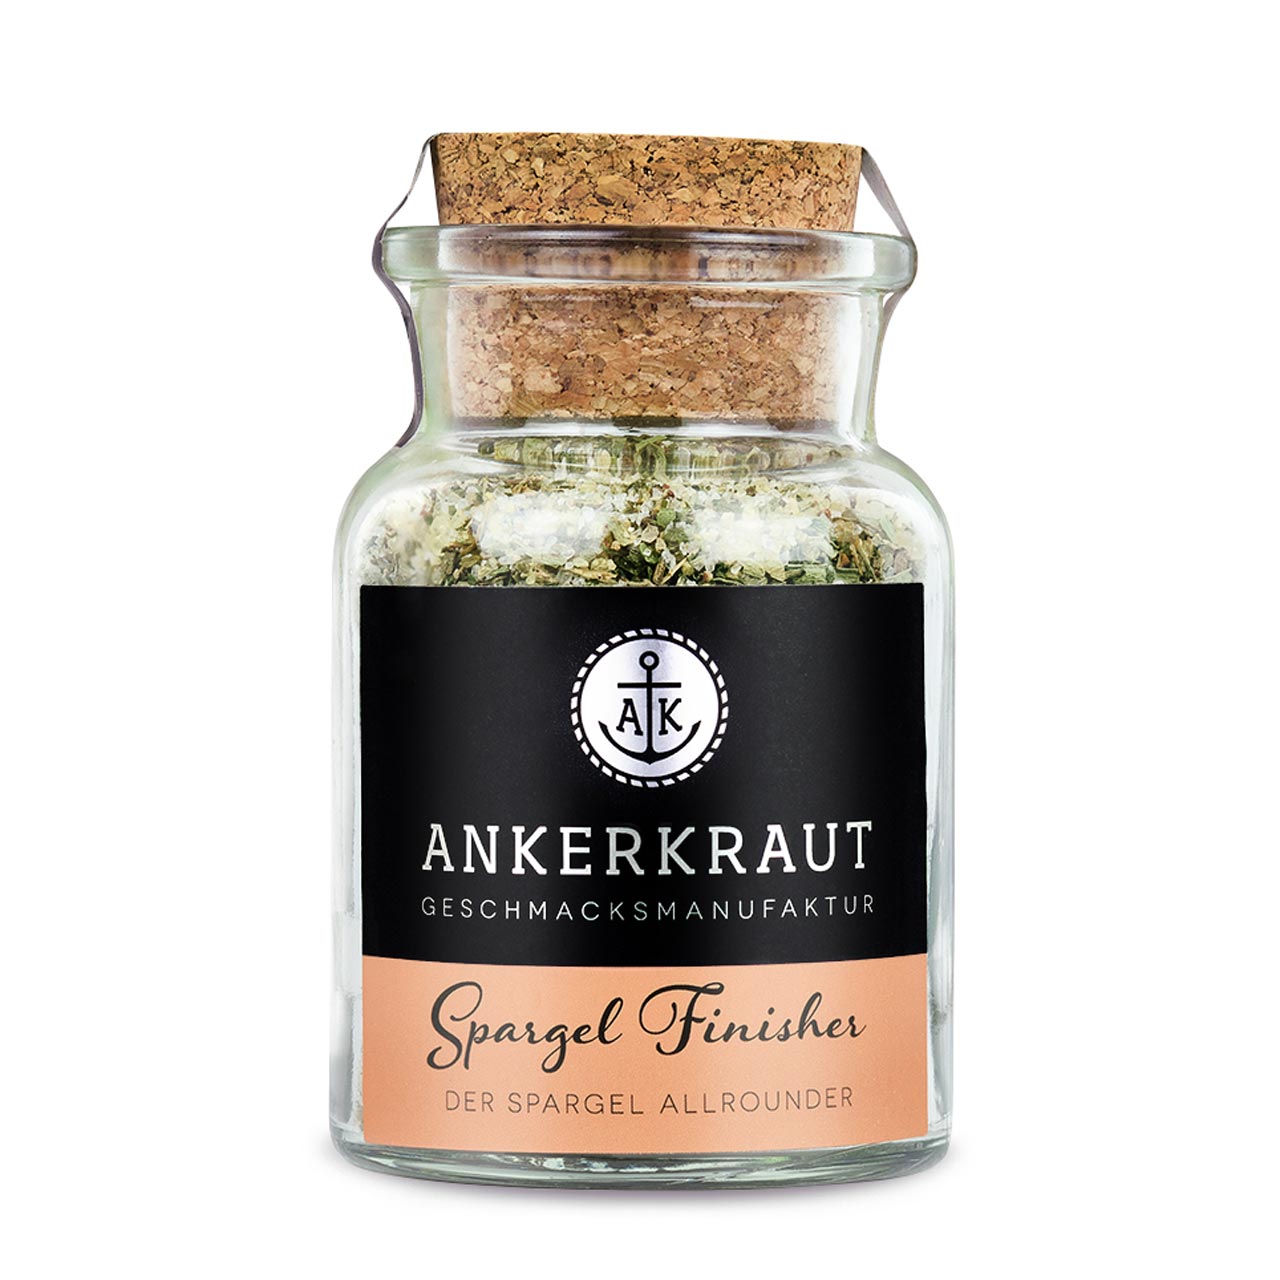 Ankerkraut Spargel Finisher, 135 g Korkenglas